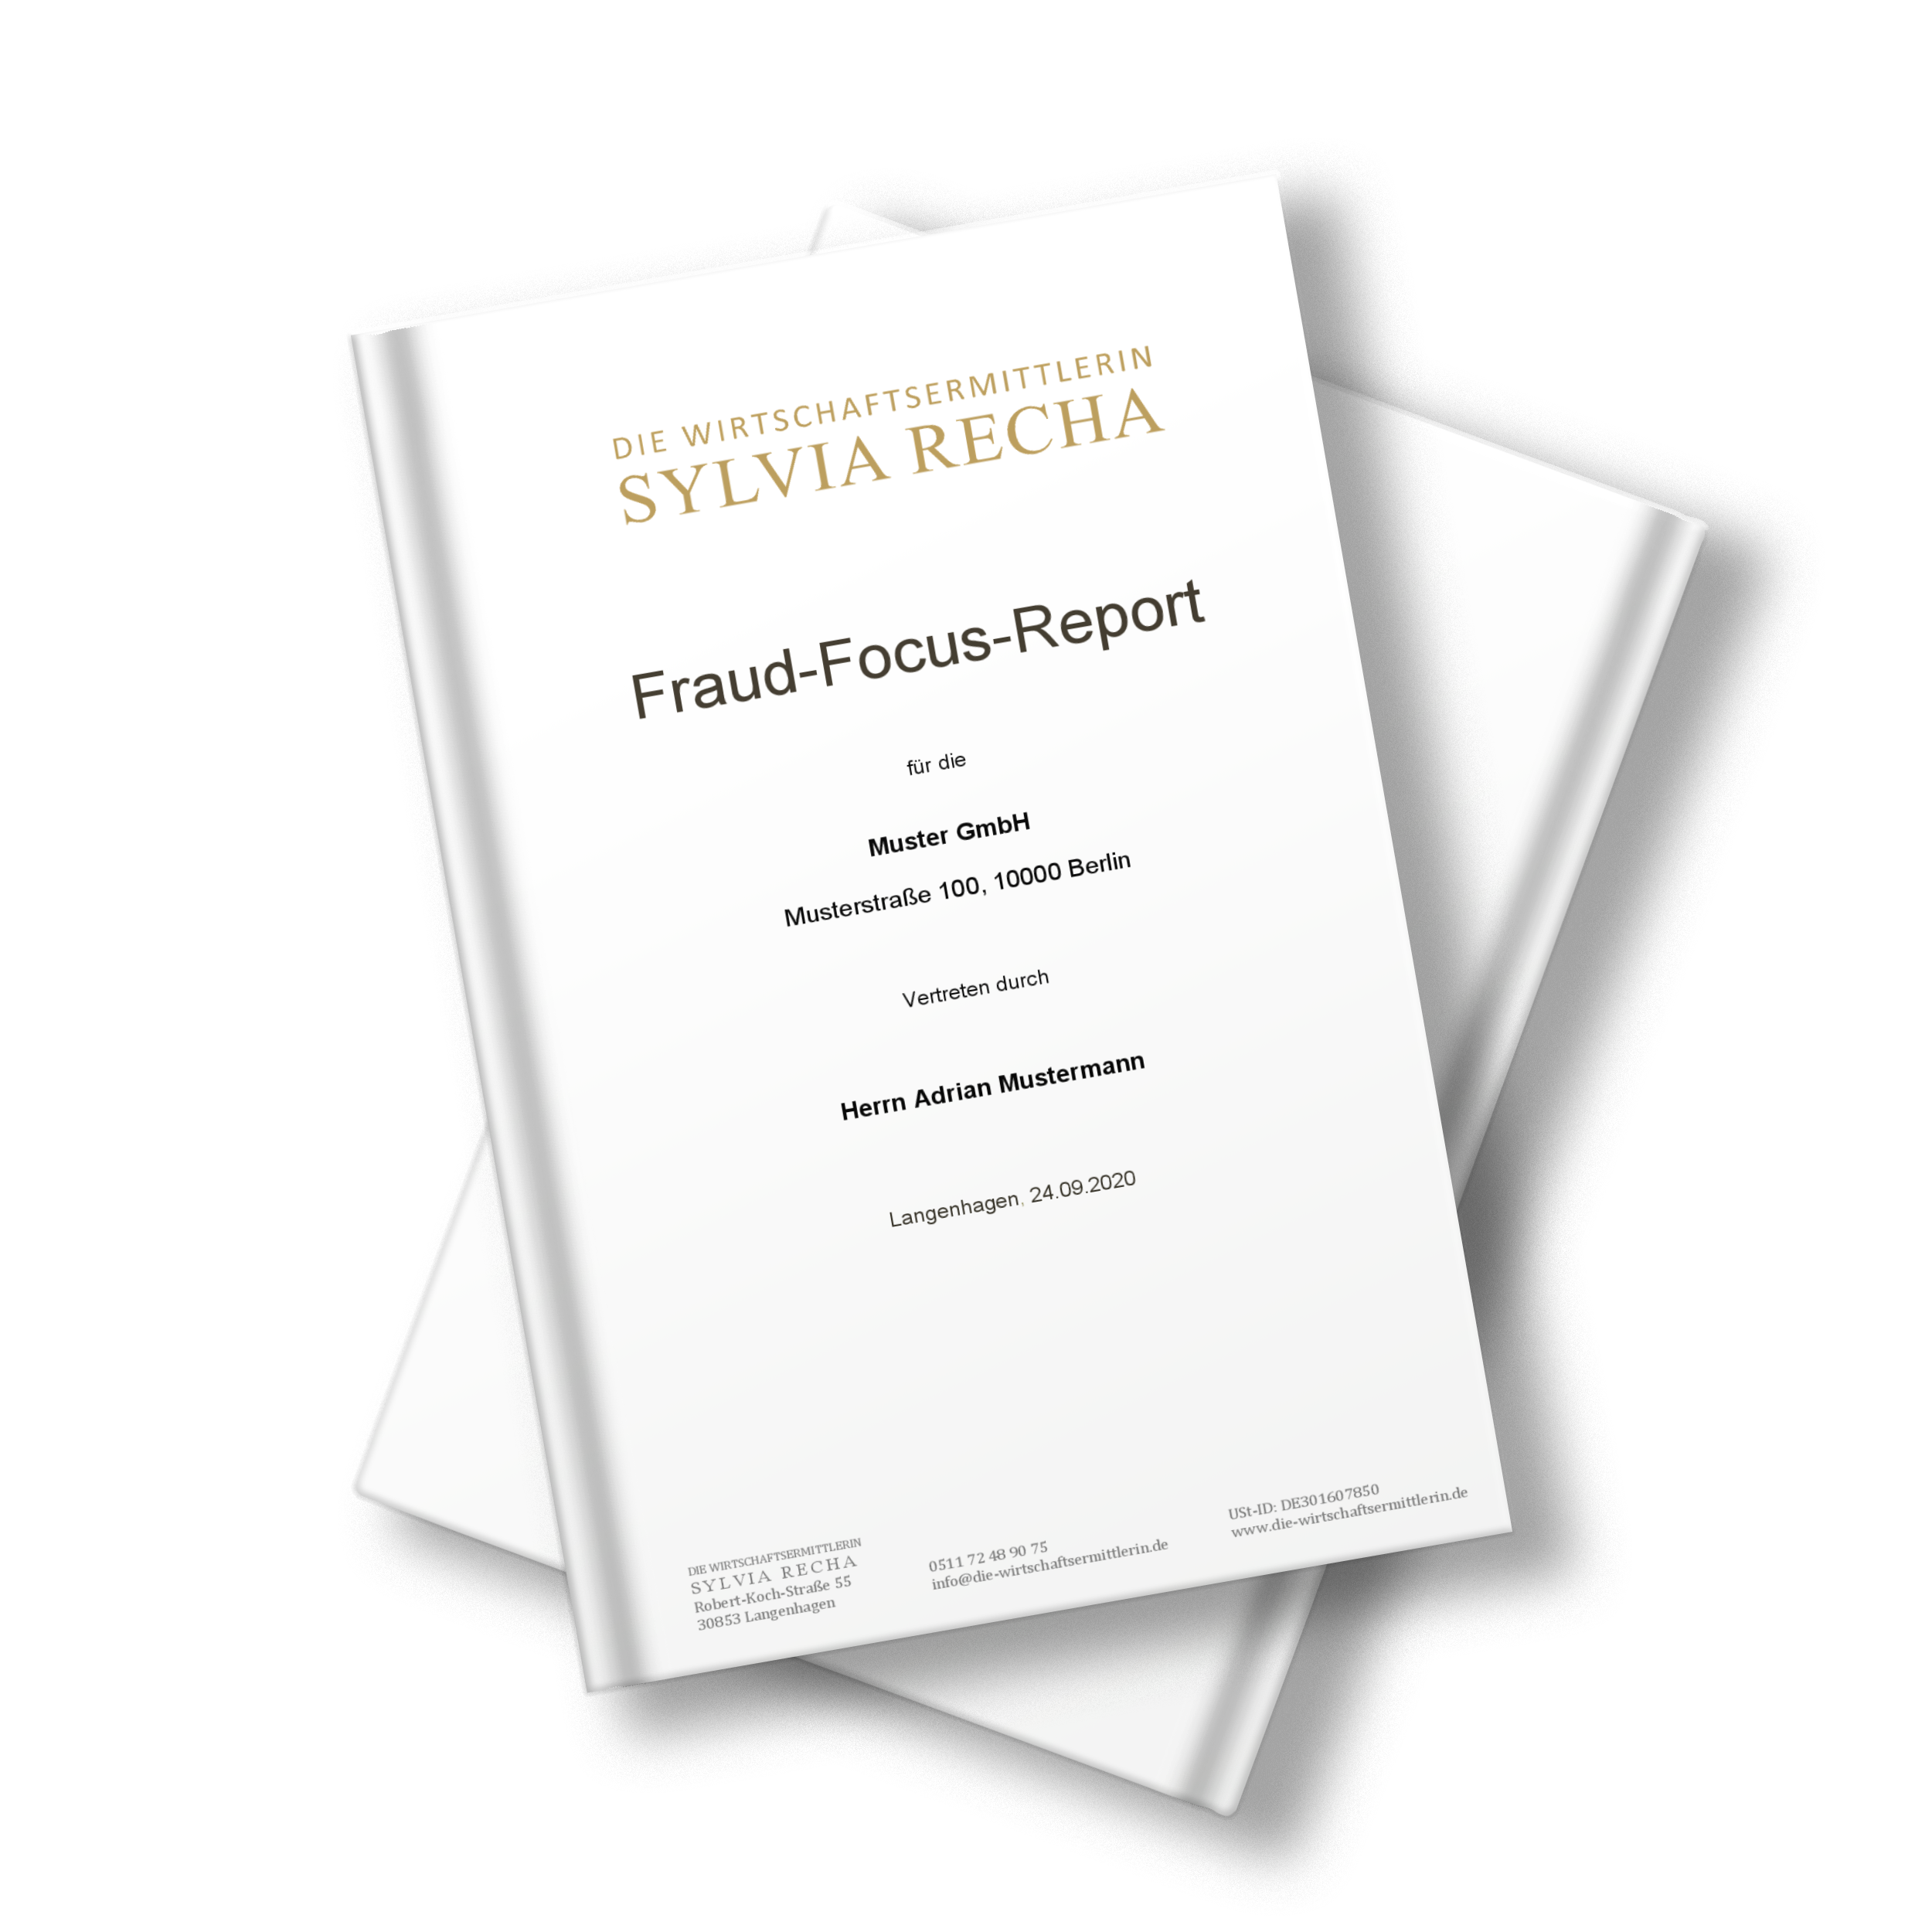 Fraud-Focus-Report